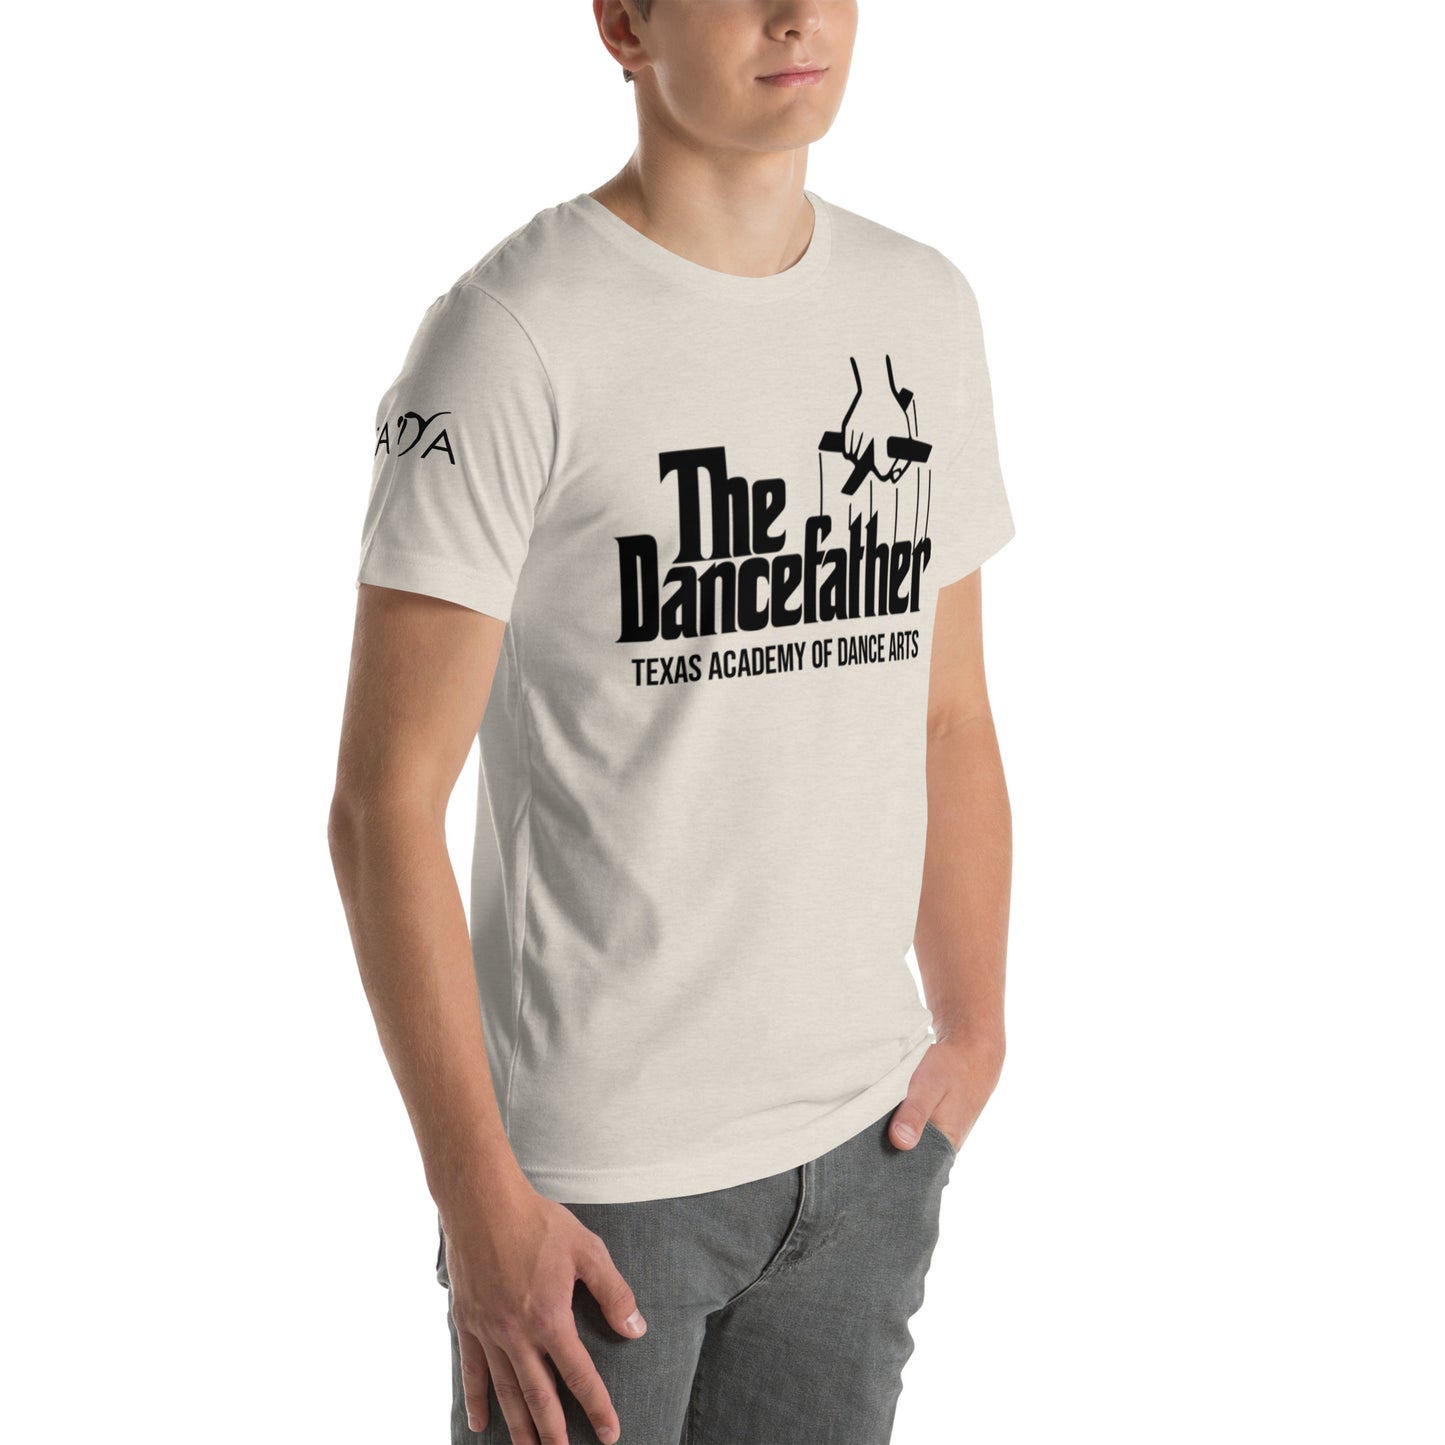 Men's T-Shirt The Dancefather